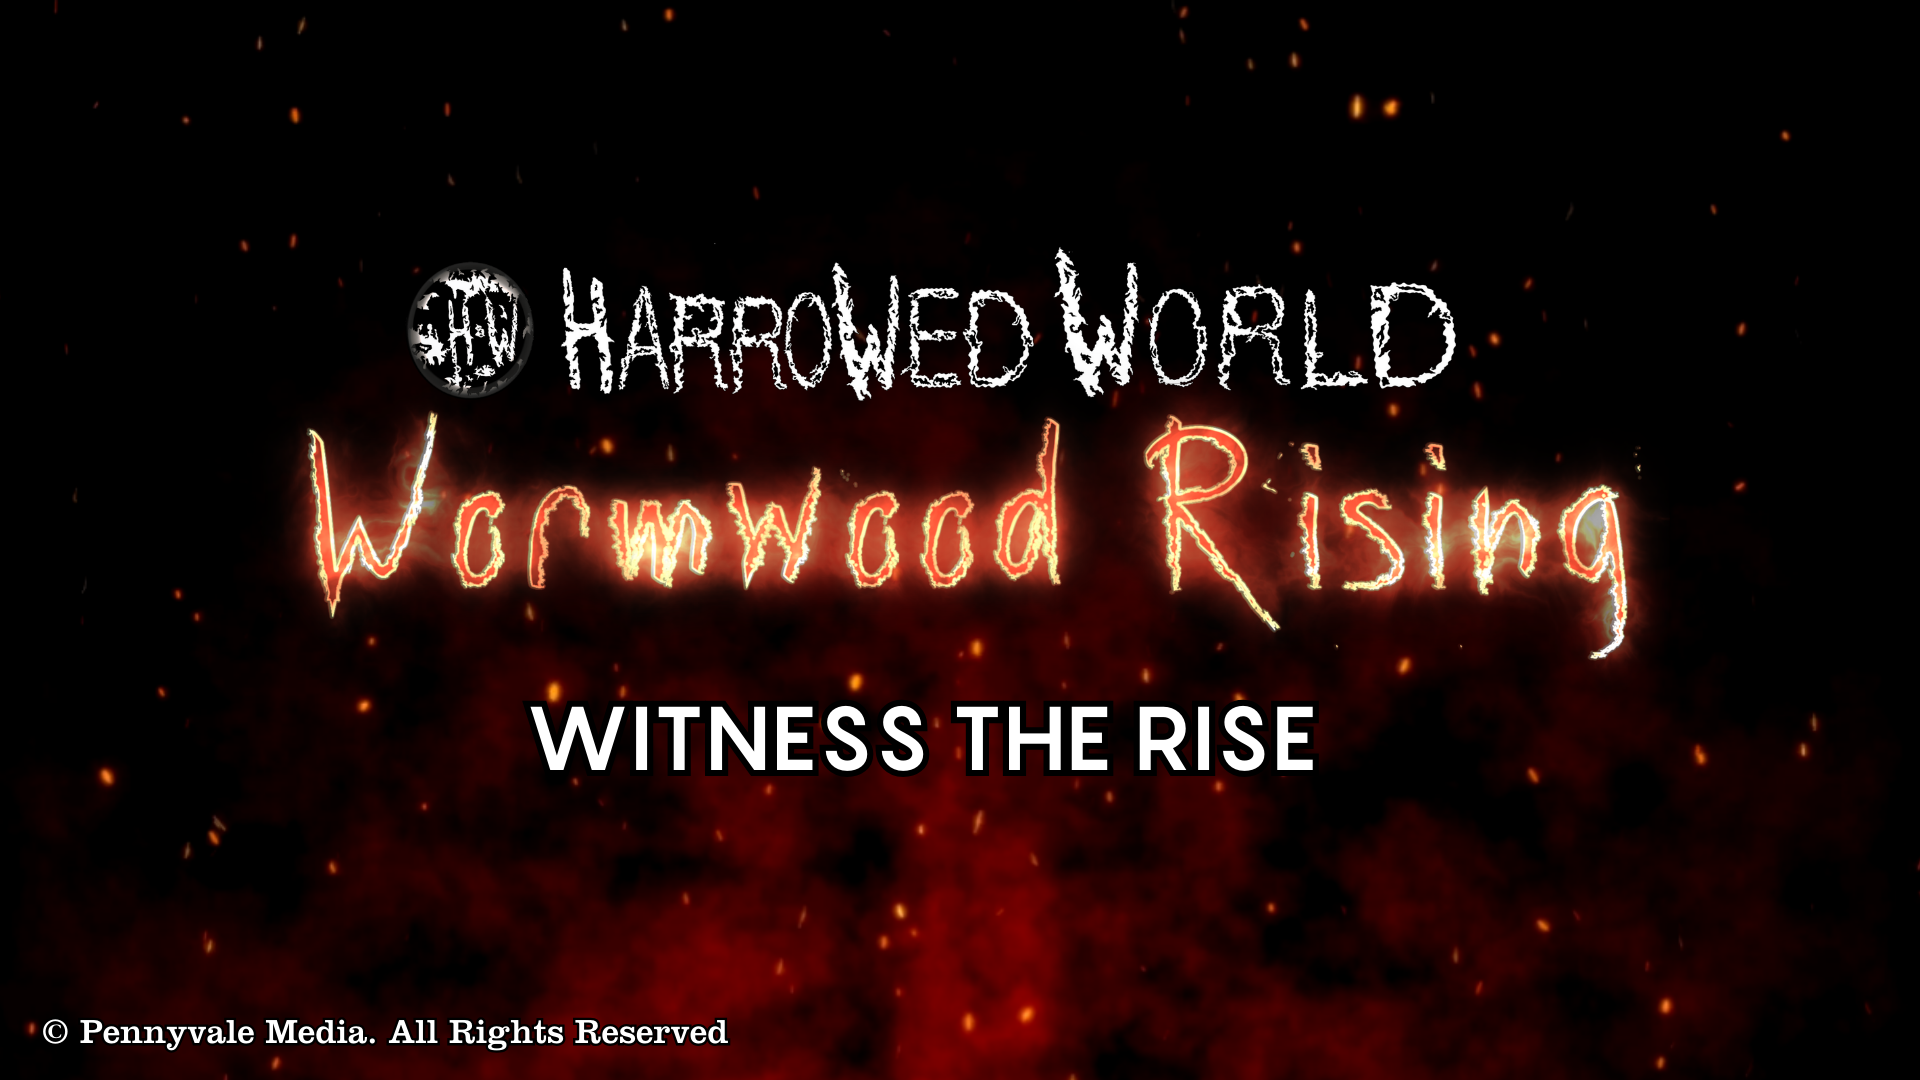 Harrowed World: Wormwood Rising - Gothic Magic Visual Novel